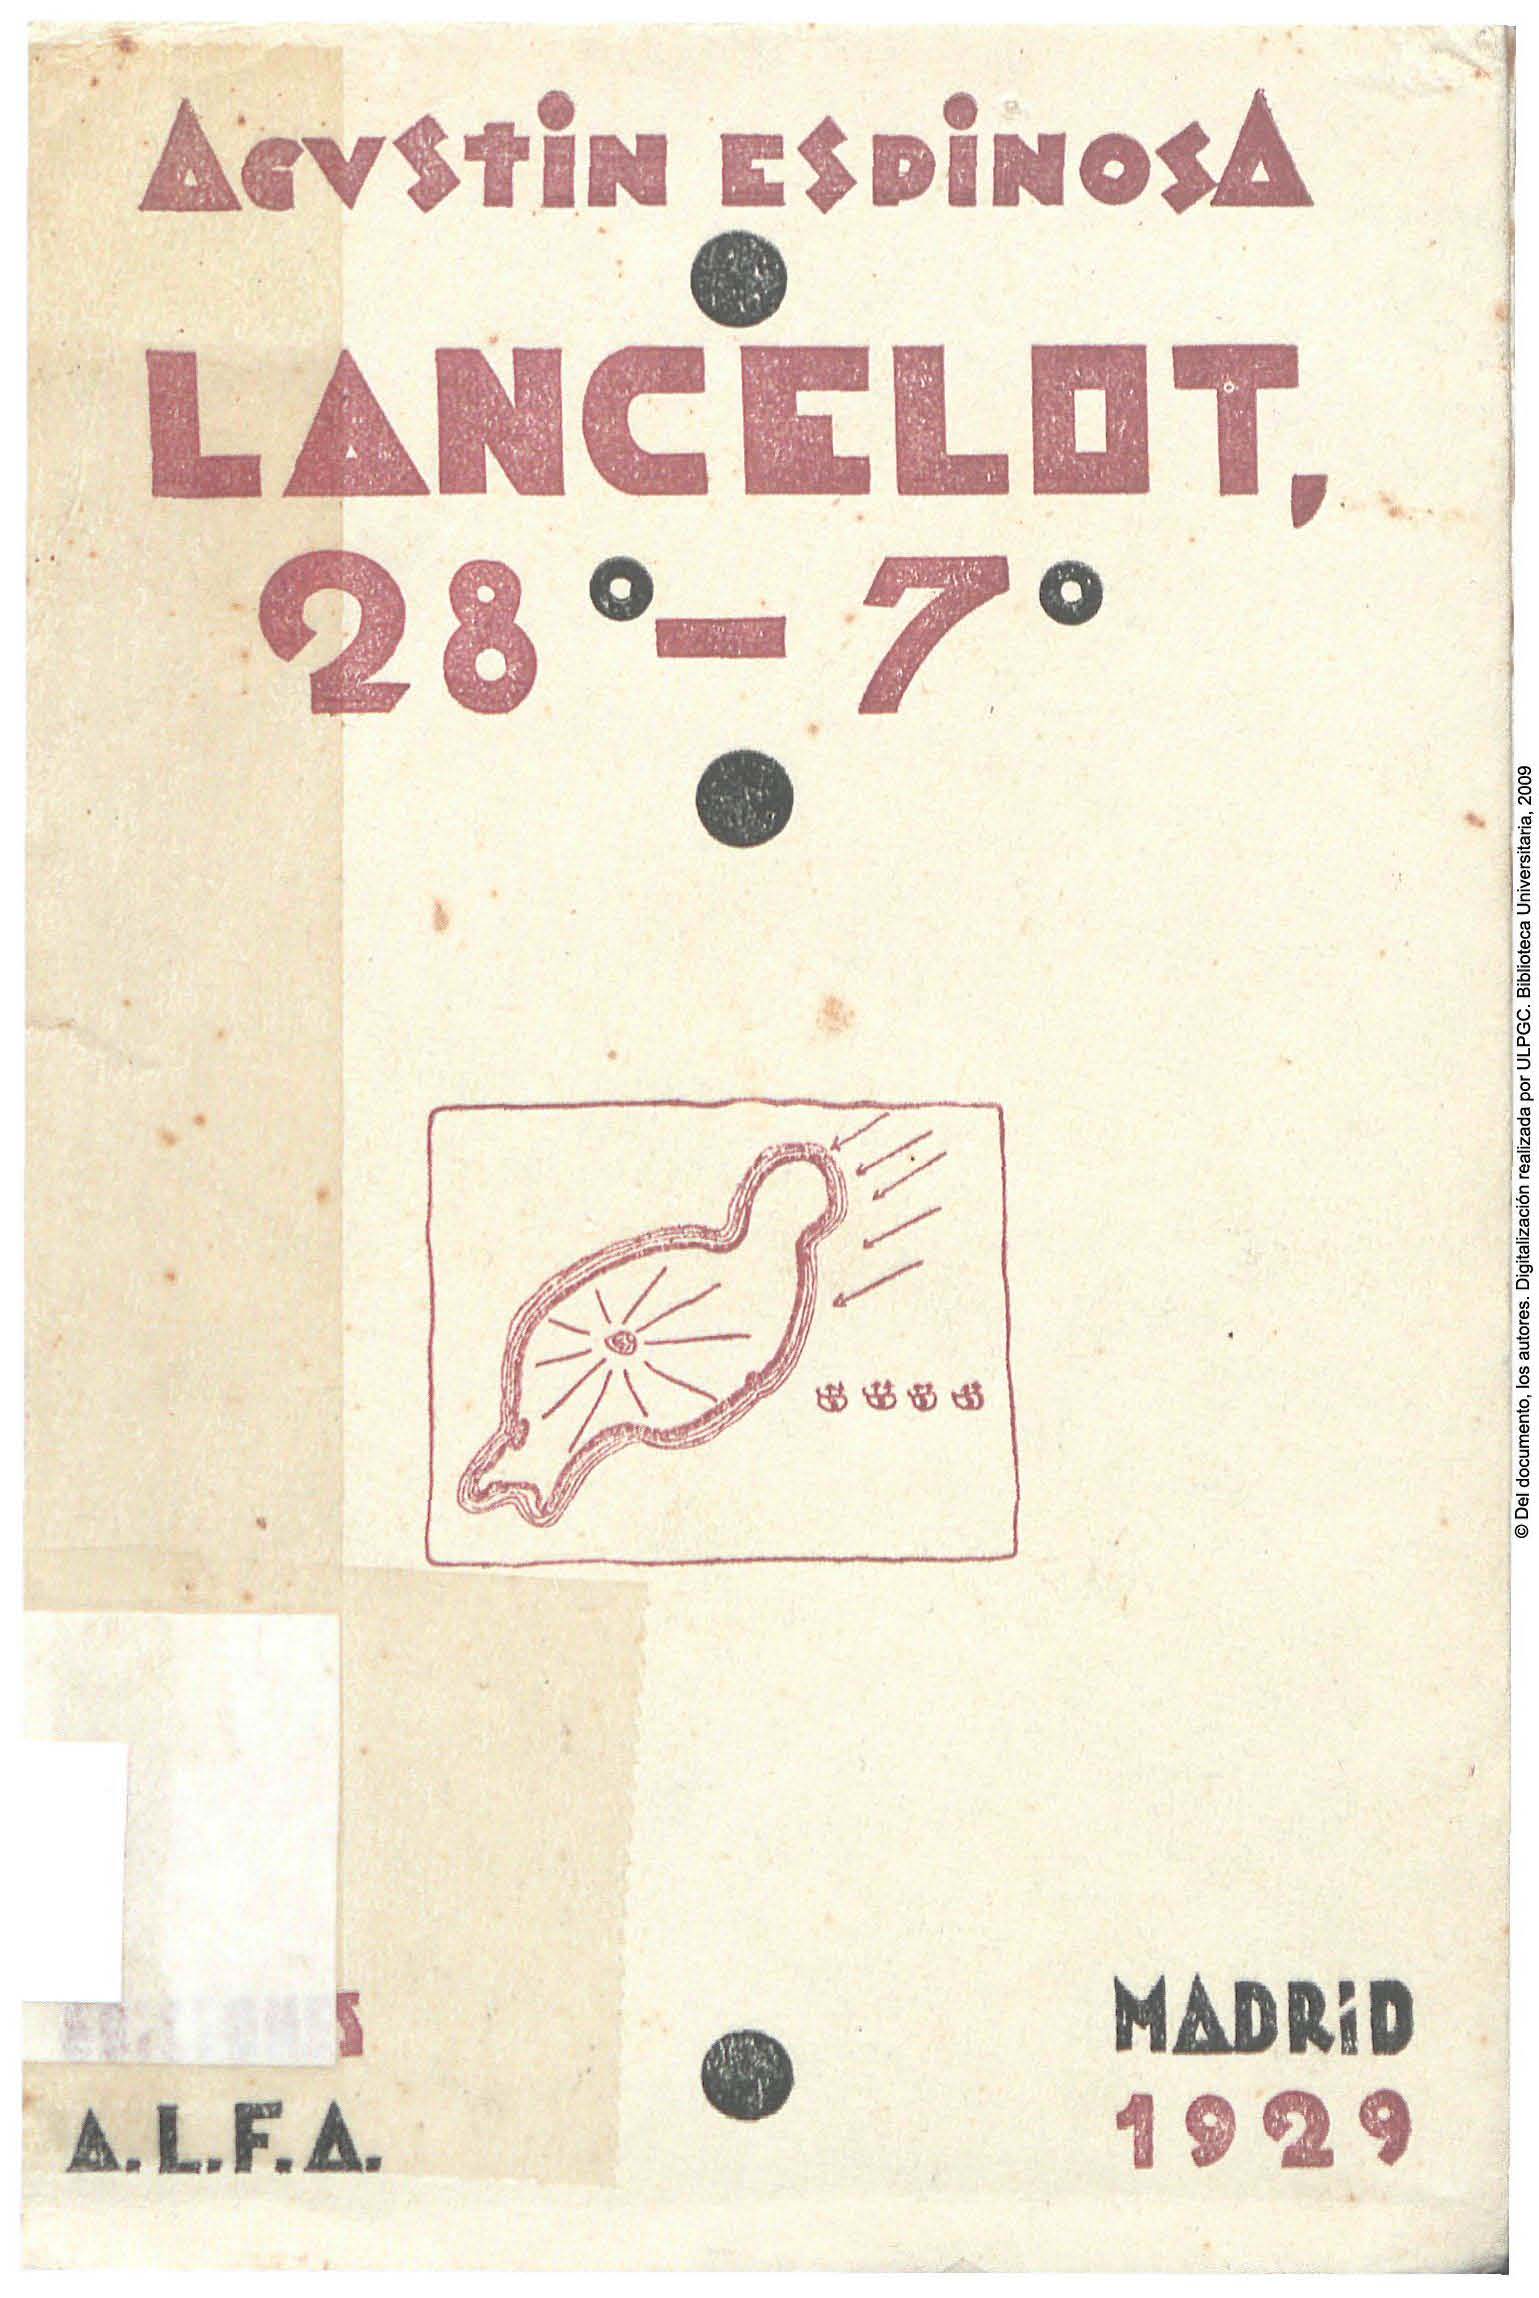 Lancelot 28º - 7º